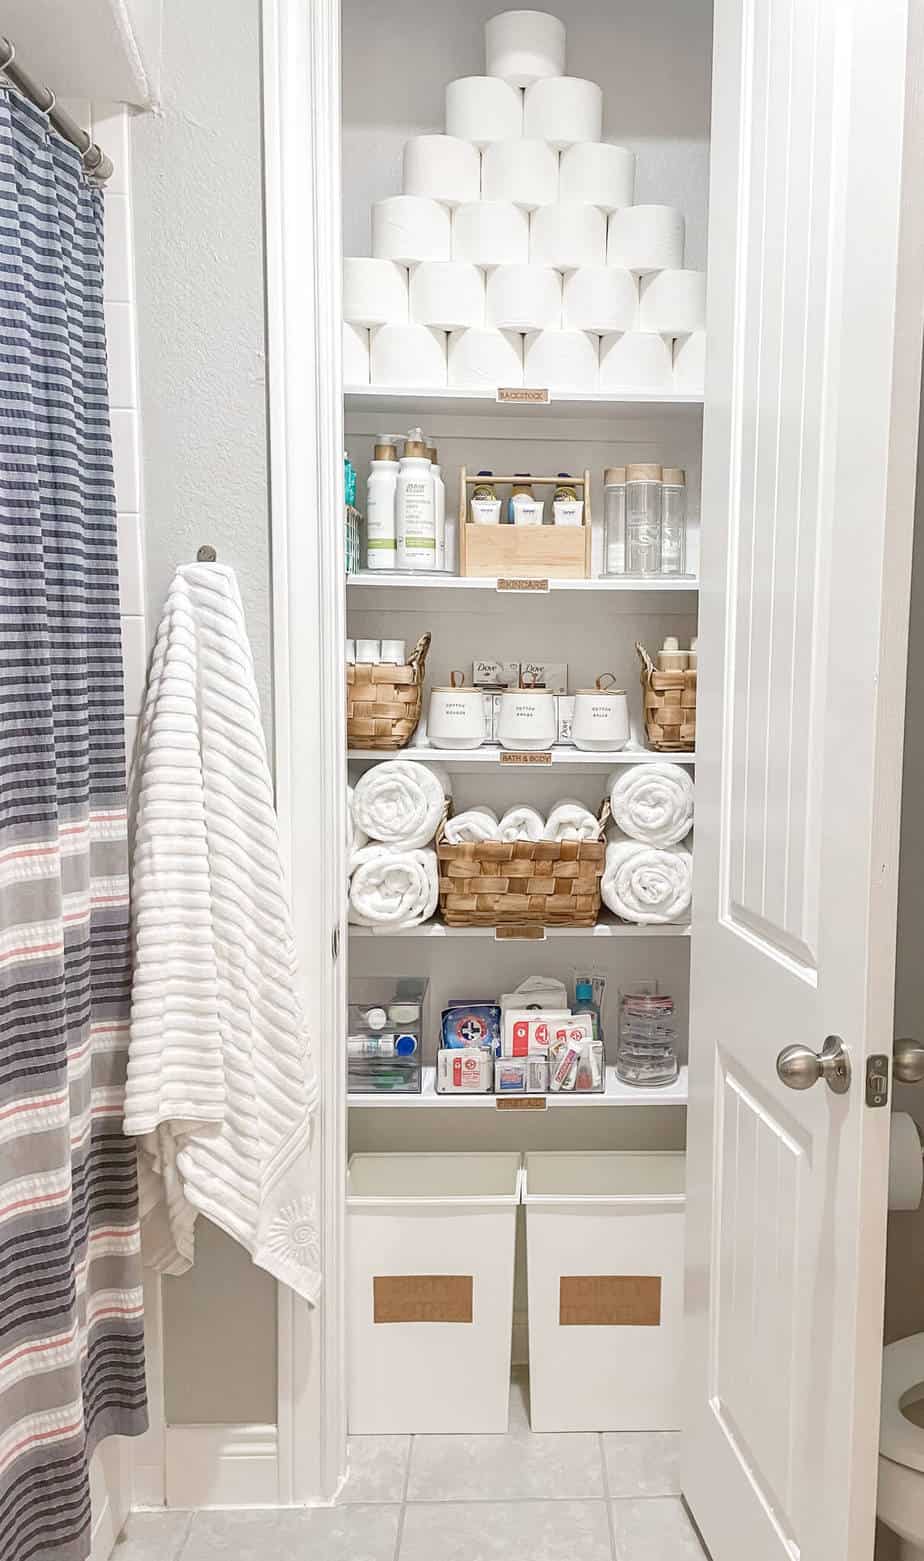 An extremely organized bathroom storage closet